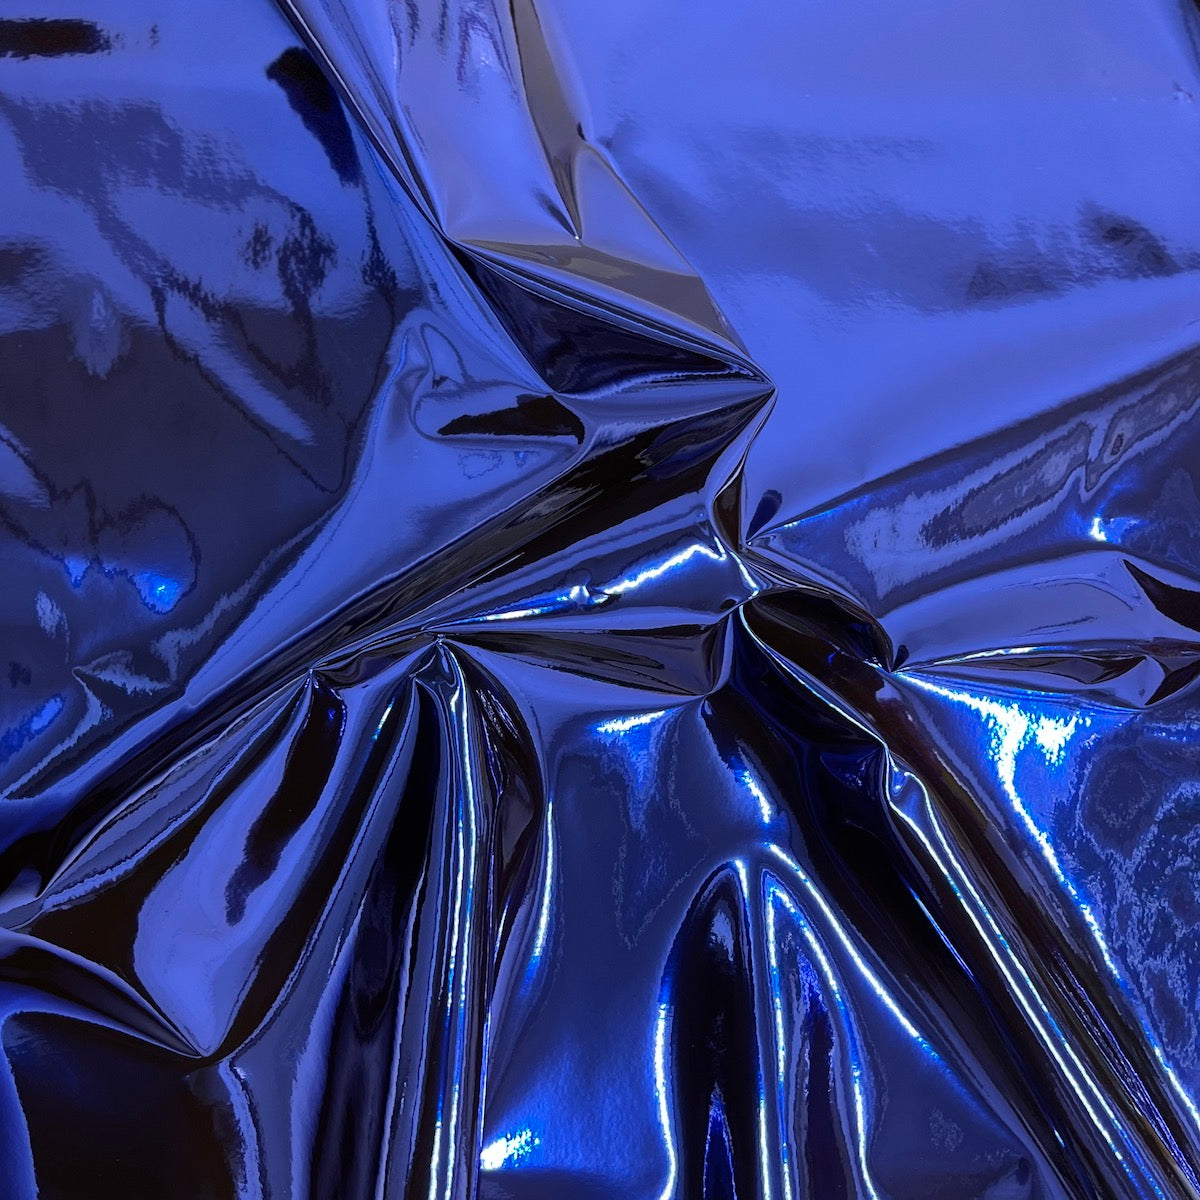 Tela de vinilo con espejo reflectante cromado azul real